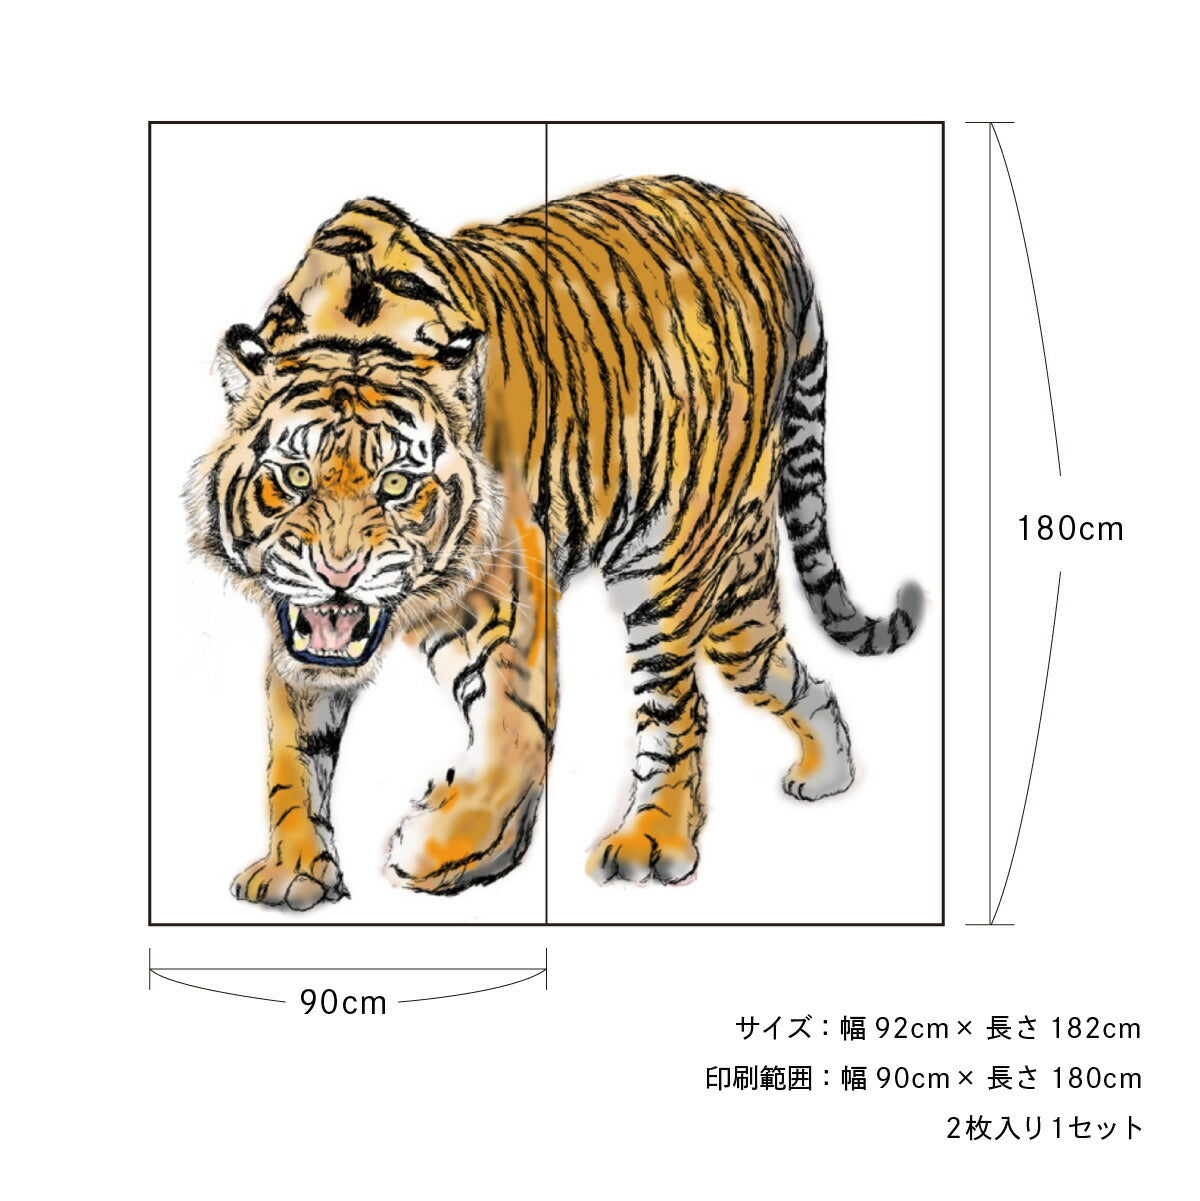 Shoji Animal Design Shoji Paper Cheat Sheet tiger_07S Roar 92cm x 182cm 2 pieces Glue Type Asahipen Year of the Tiger Zodiac White Tiger Tiger Stylish Unique Western Style Japanese Pattern Art Design Modern<br>